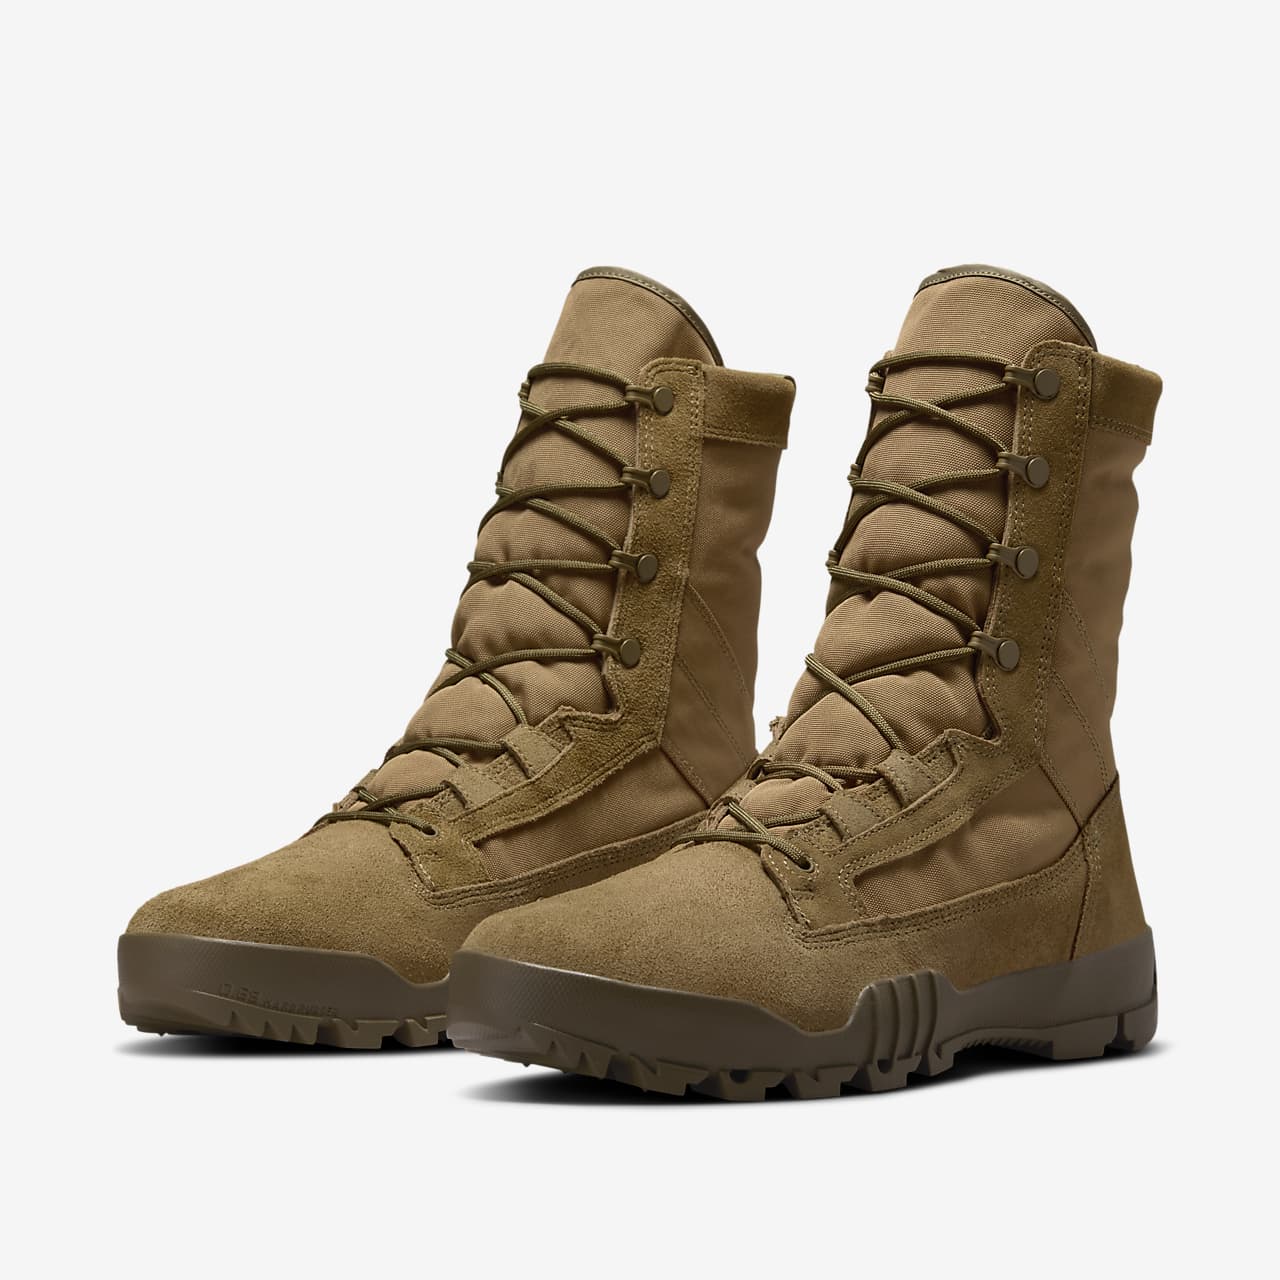 nike free combat boots